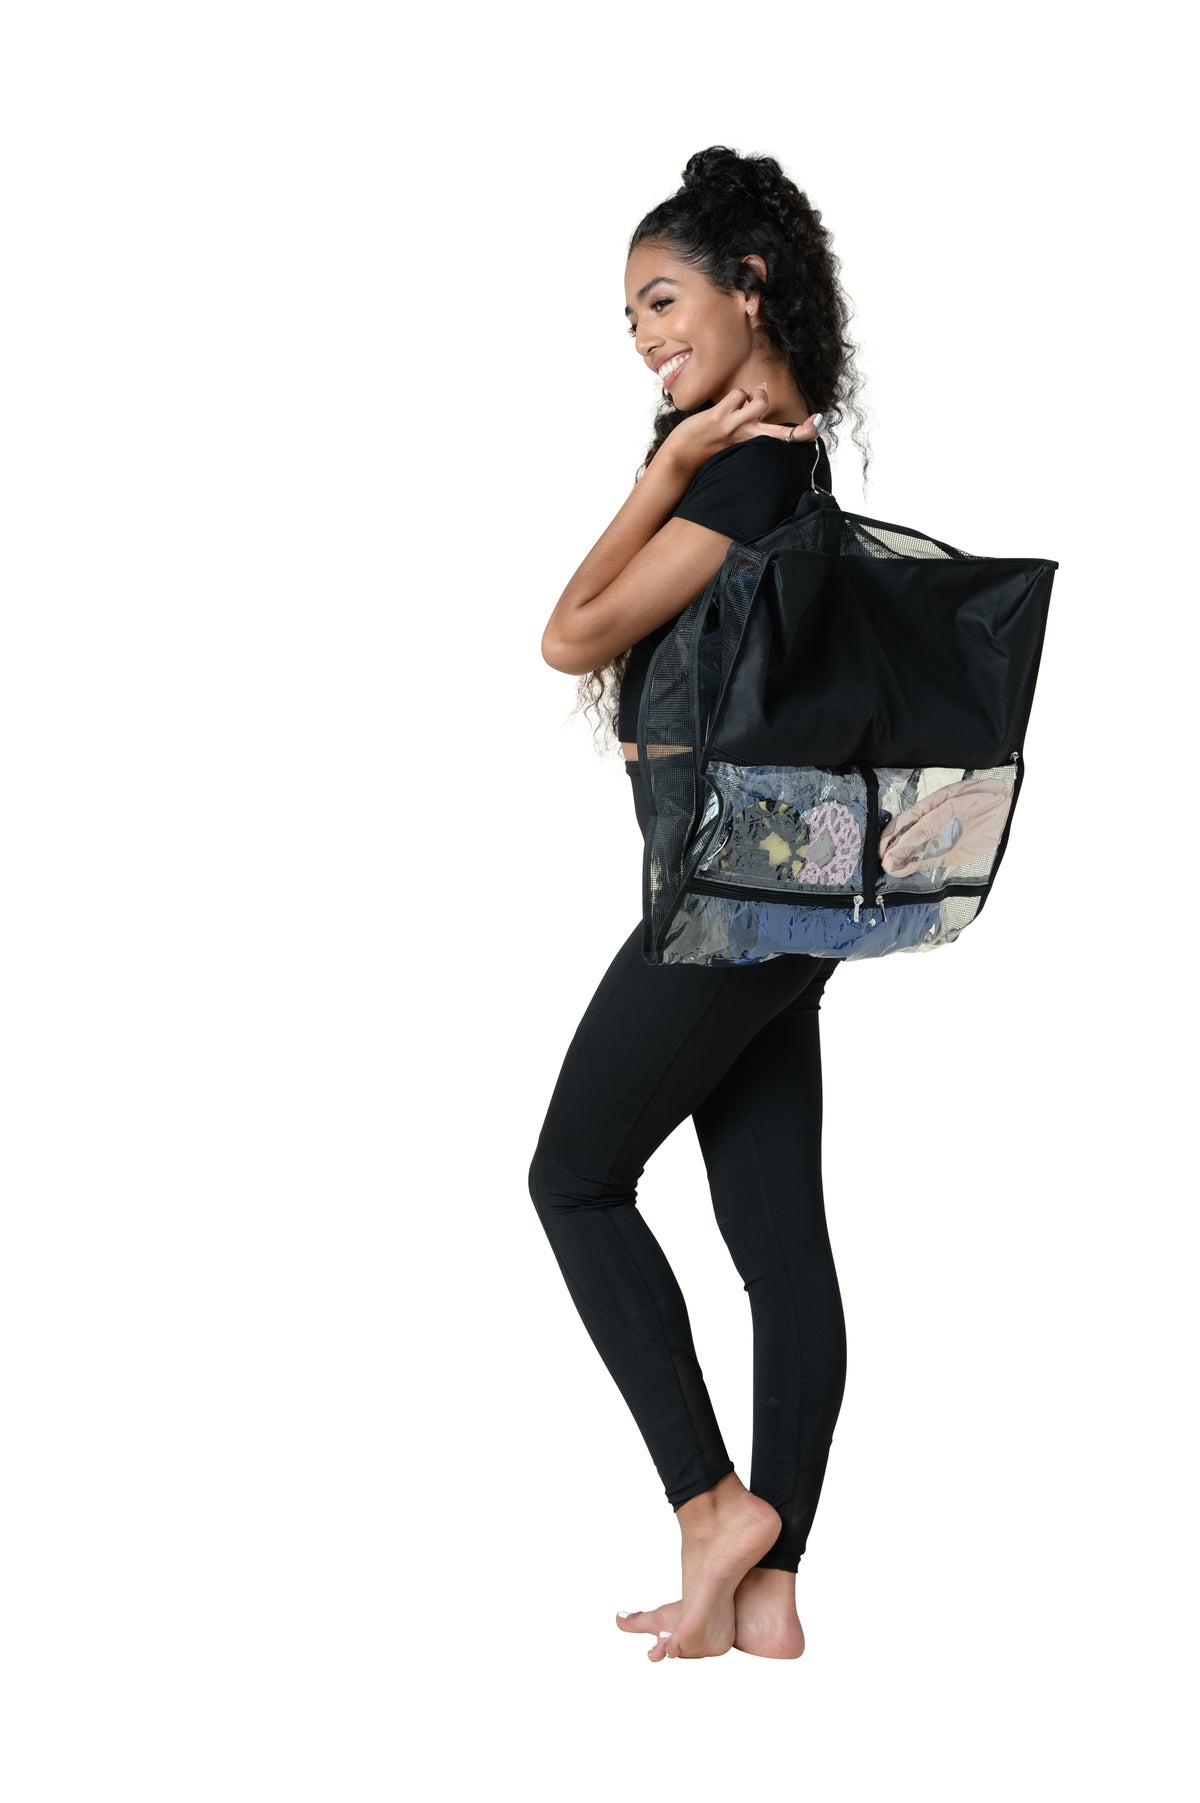 Austok Garment Bags,for Travel Storage, Dance Garment Bags, Moving